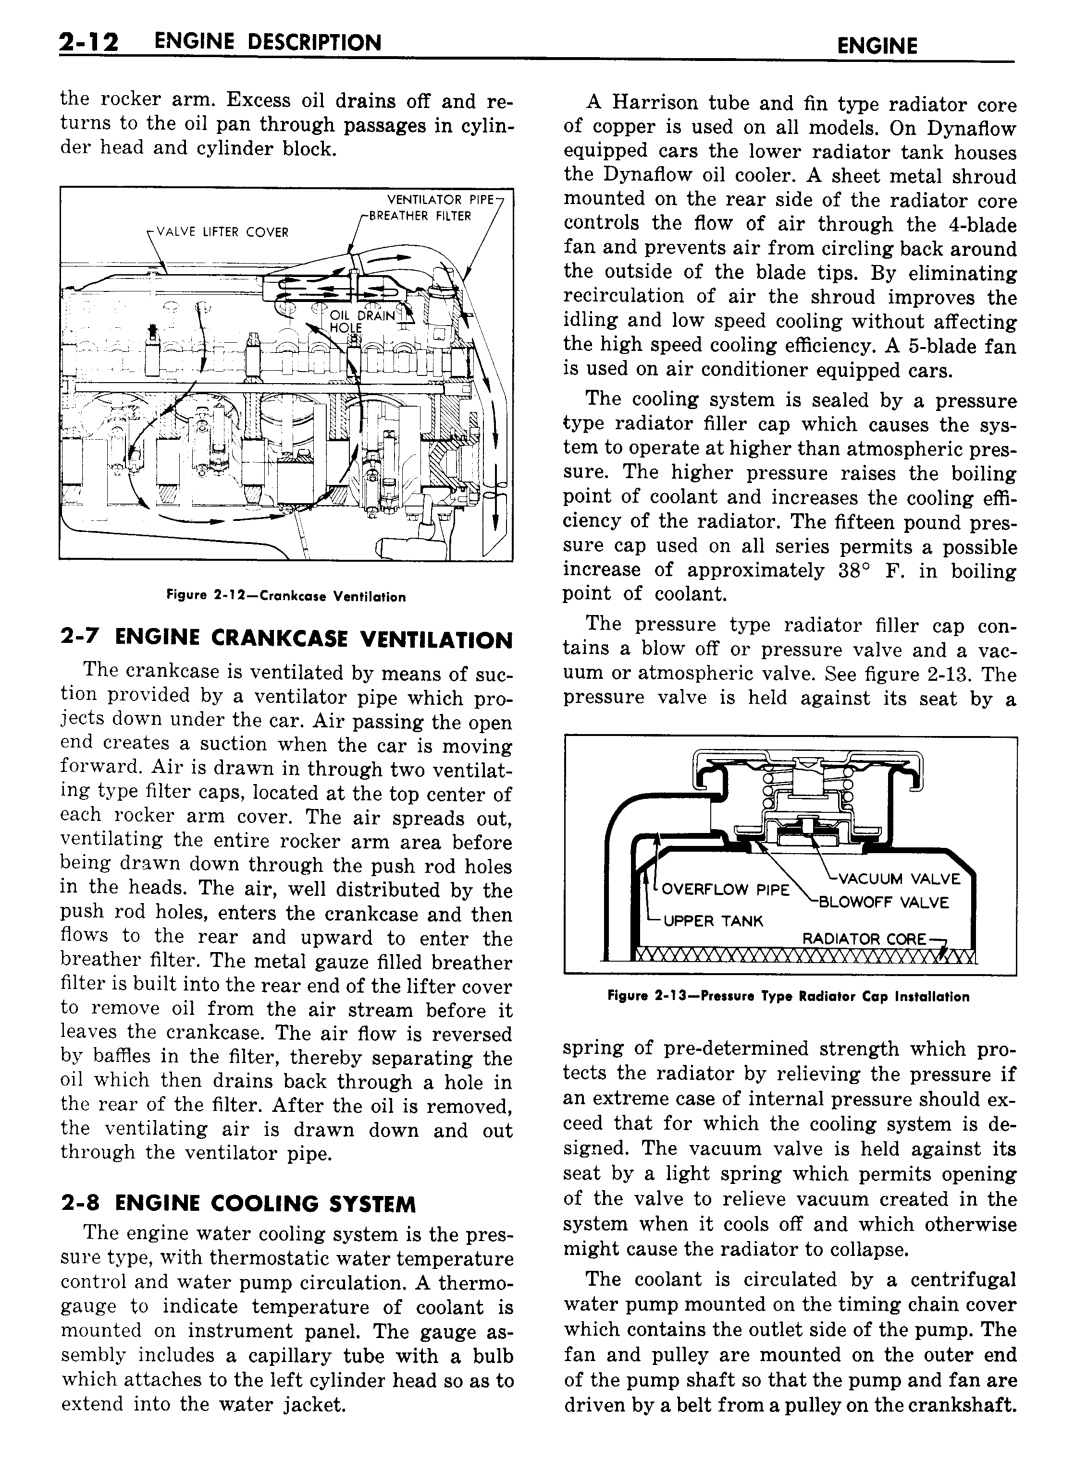 n_03 1957 Buick Shop Manual - Engine-012-012.jpg